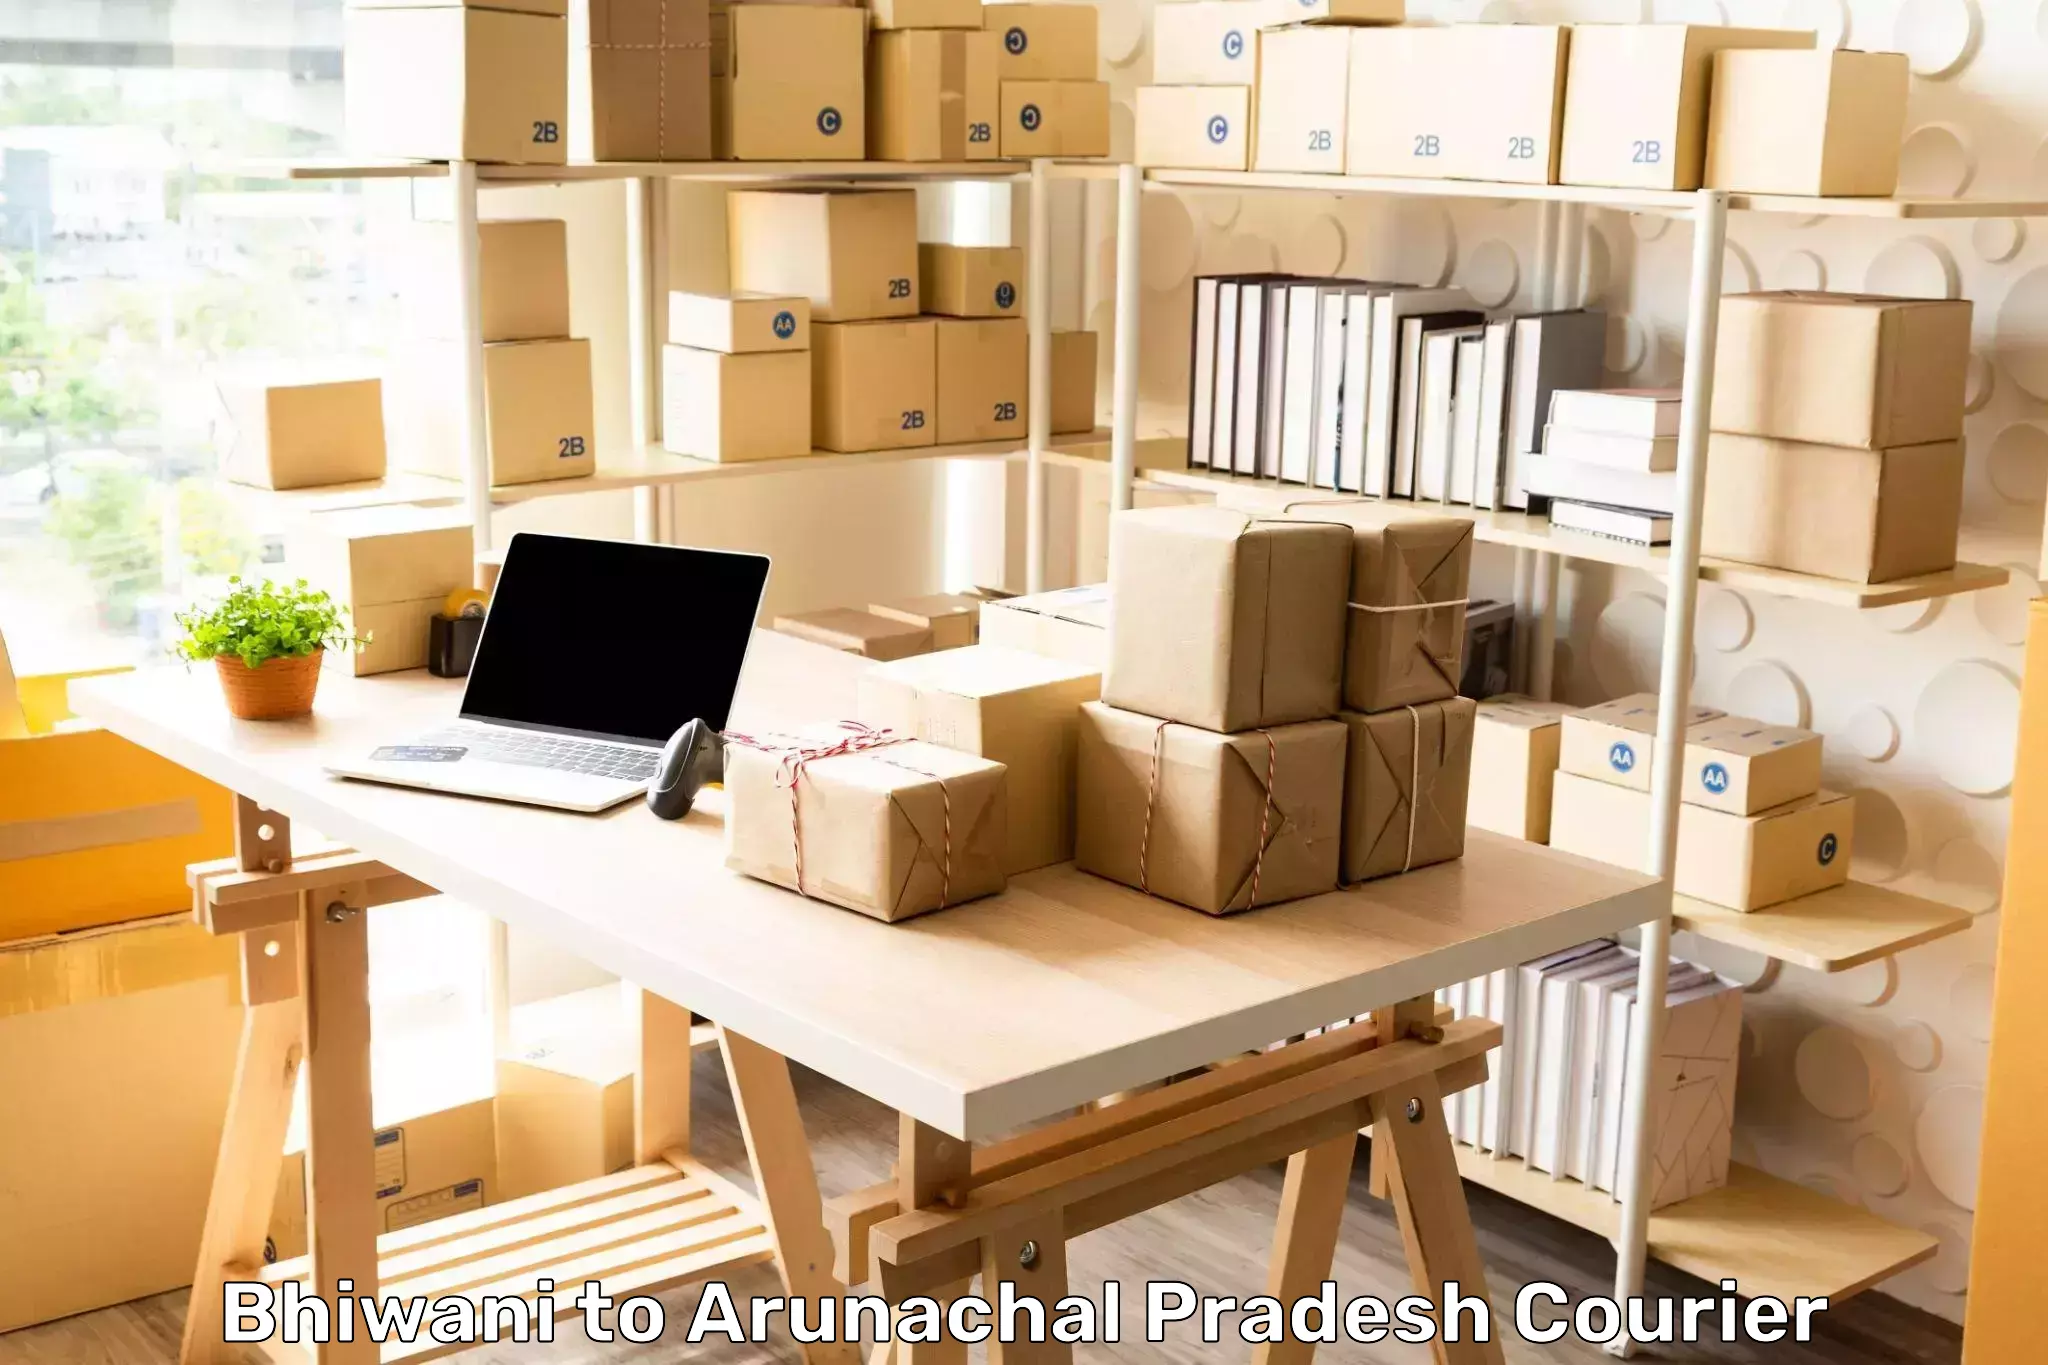 Multi-service courier options Bhiwani to Arunachal Pradesh